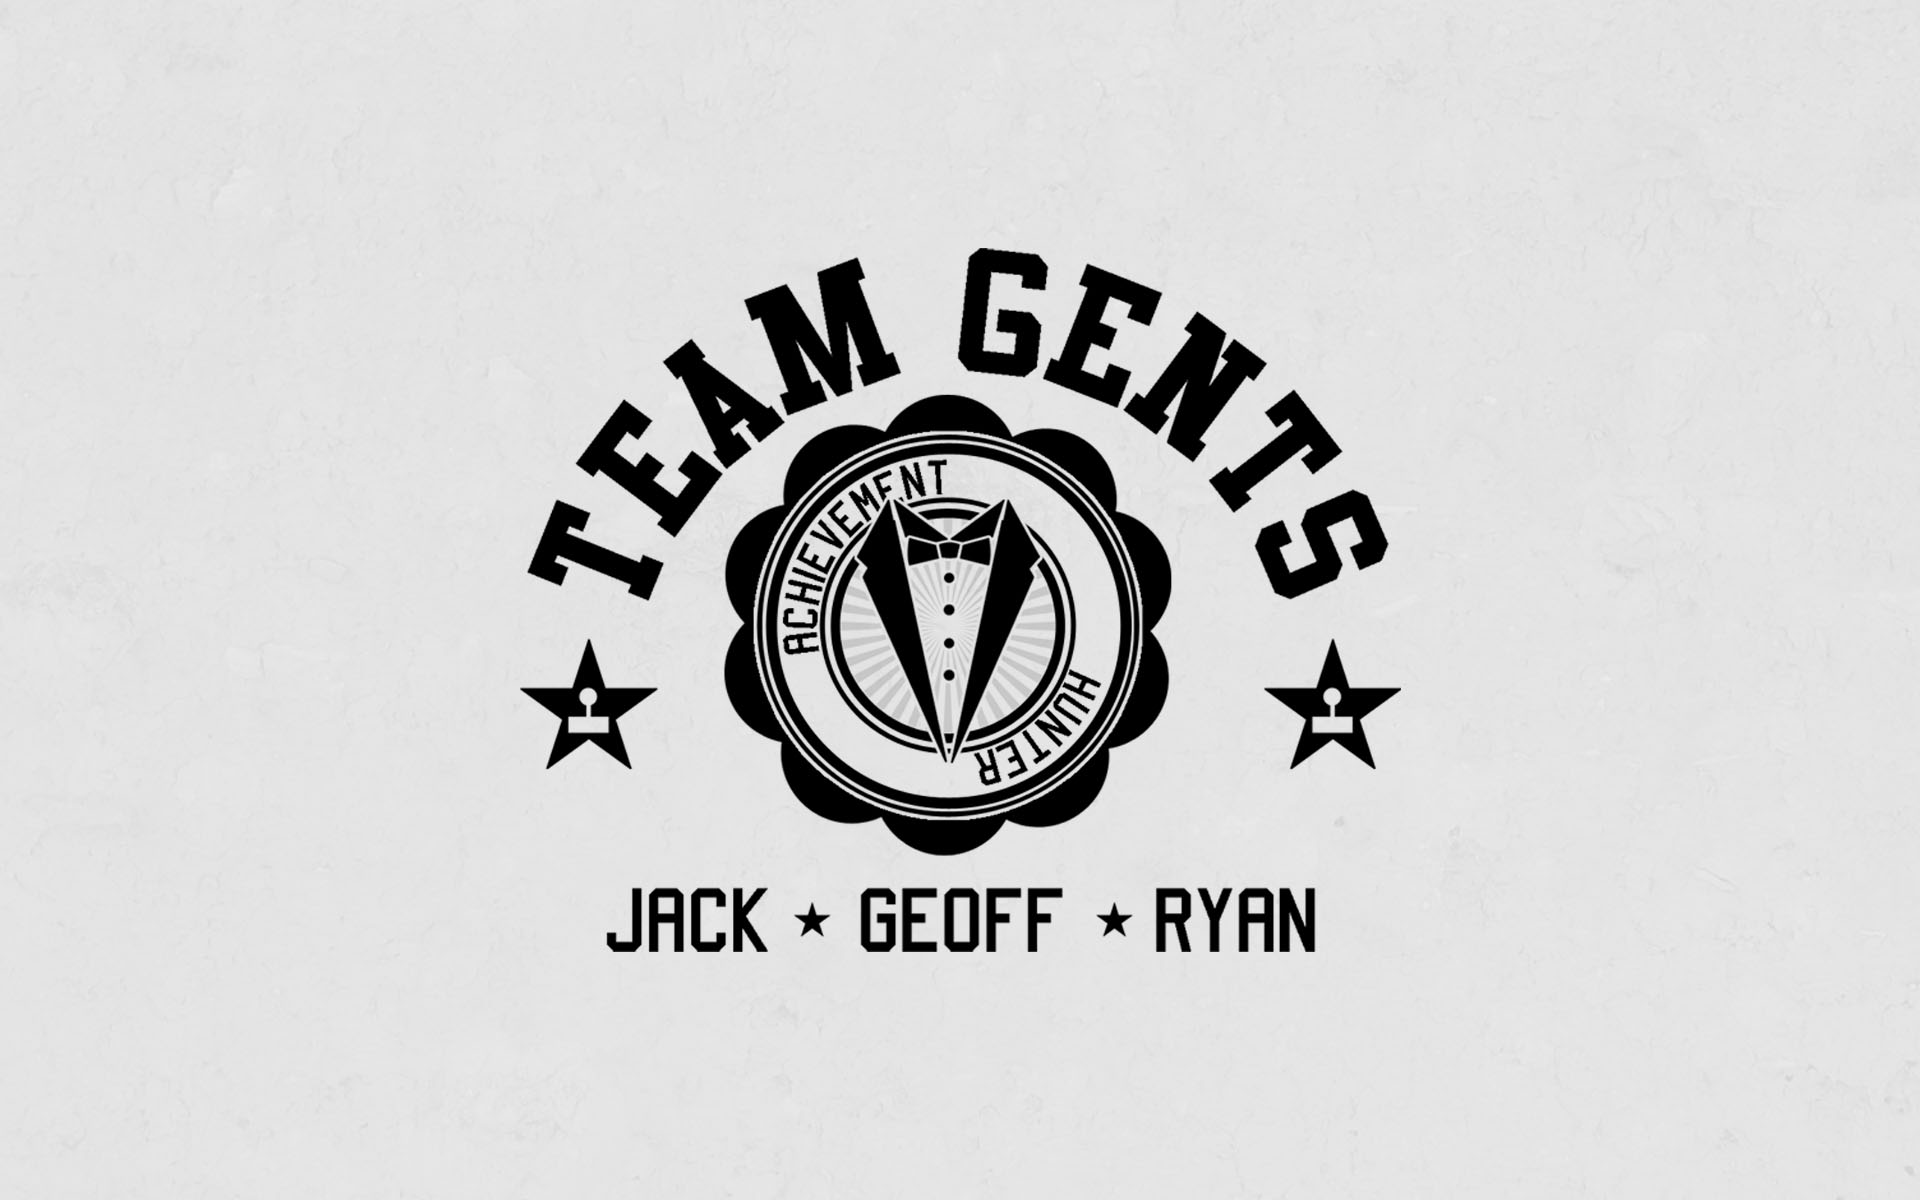 Team Gents